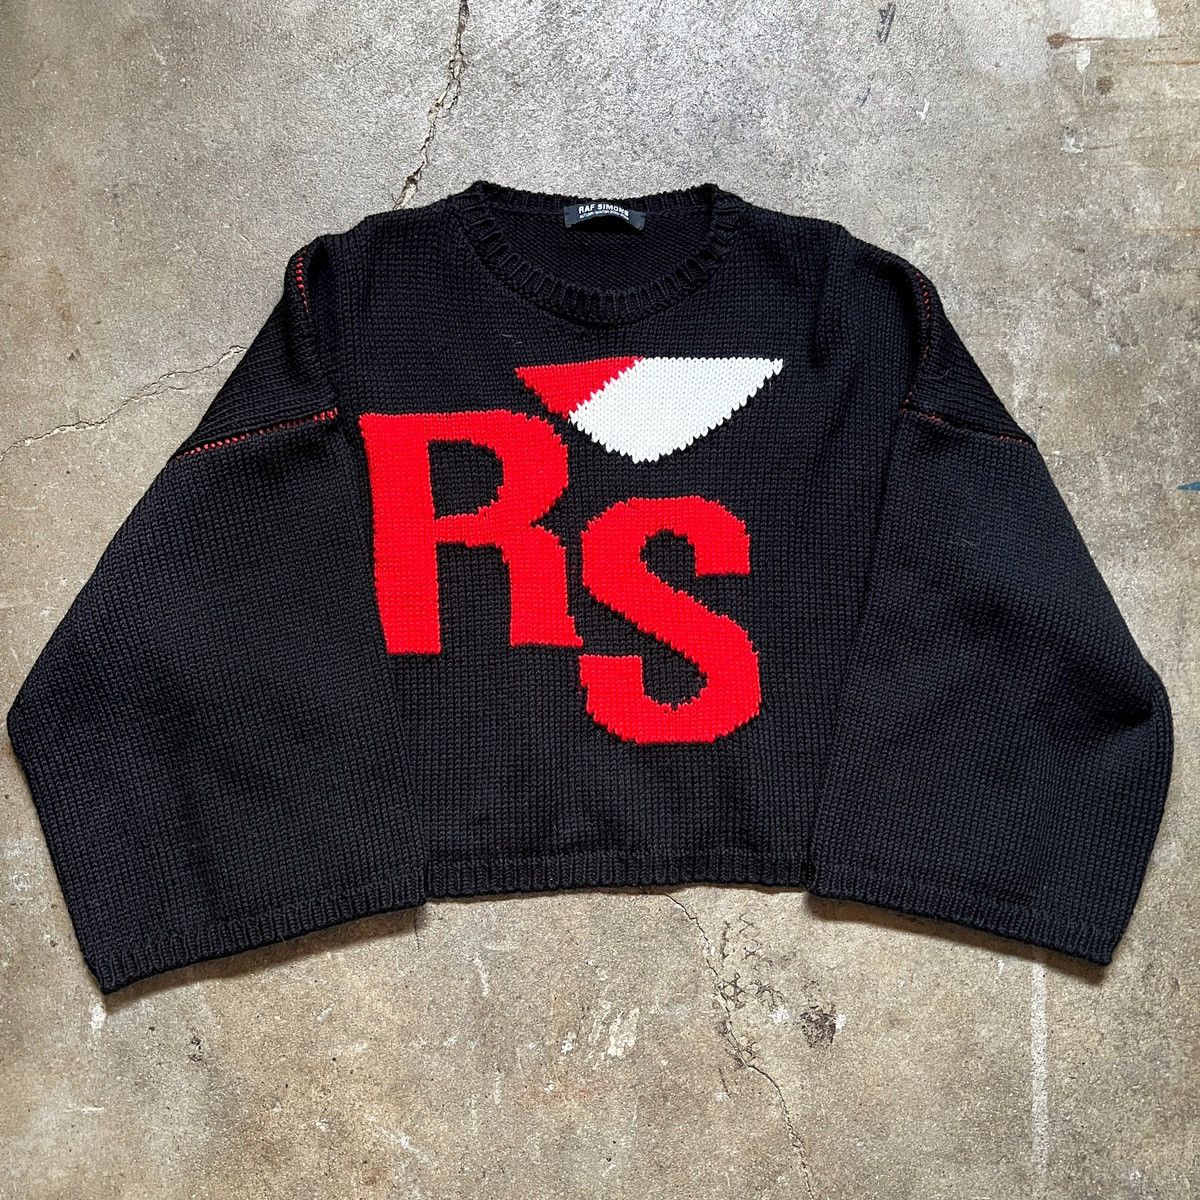 Raf Simons Raf Simons Cropped Knit Sweater | Grailed